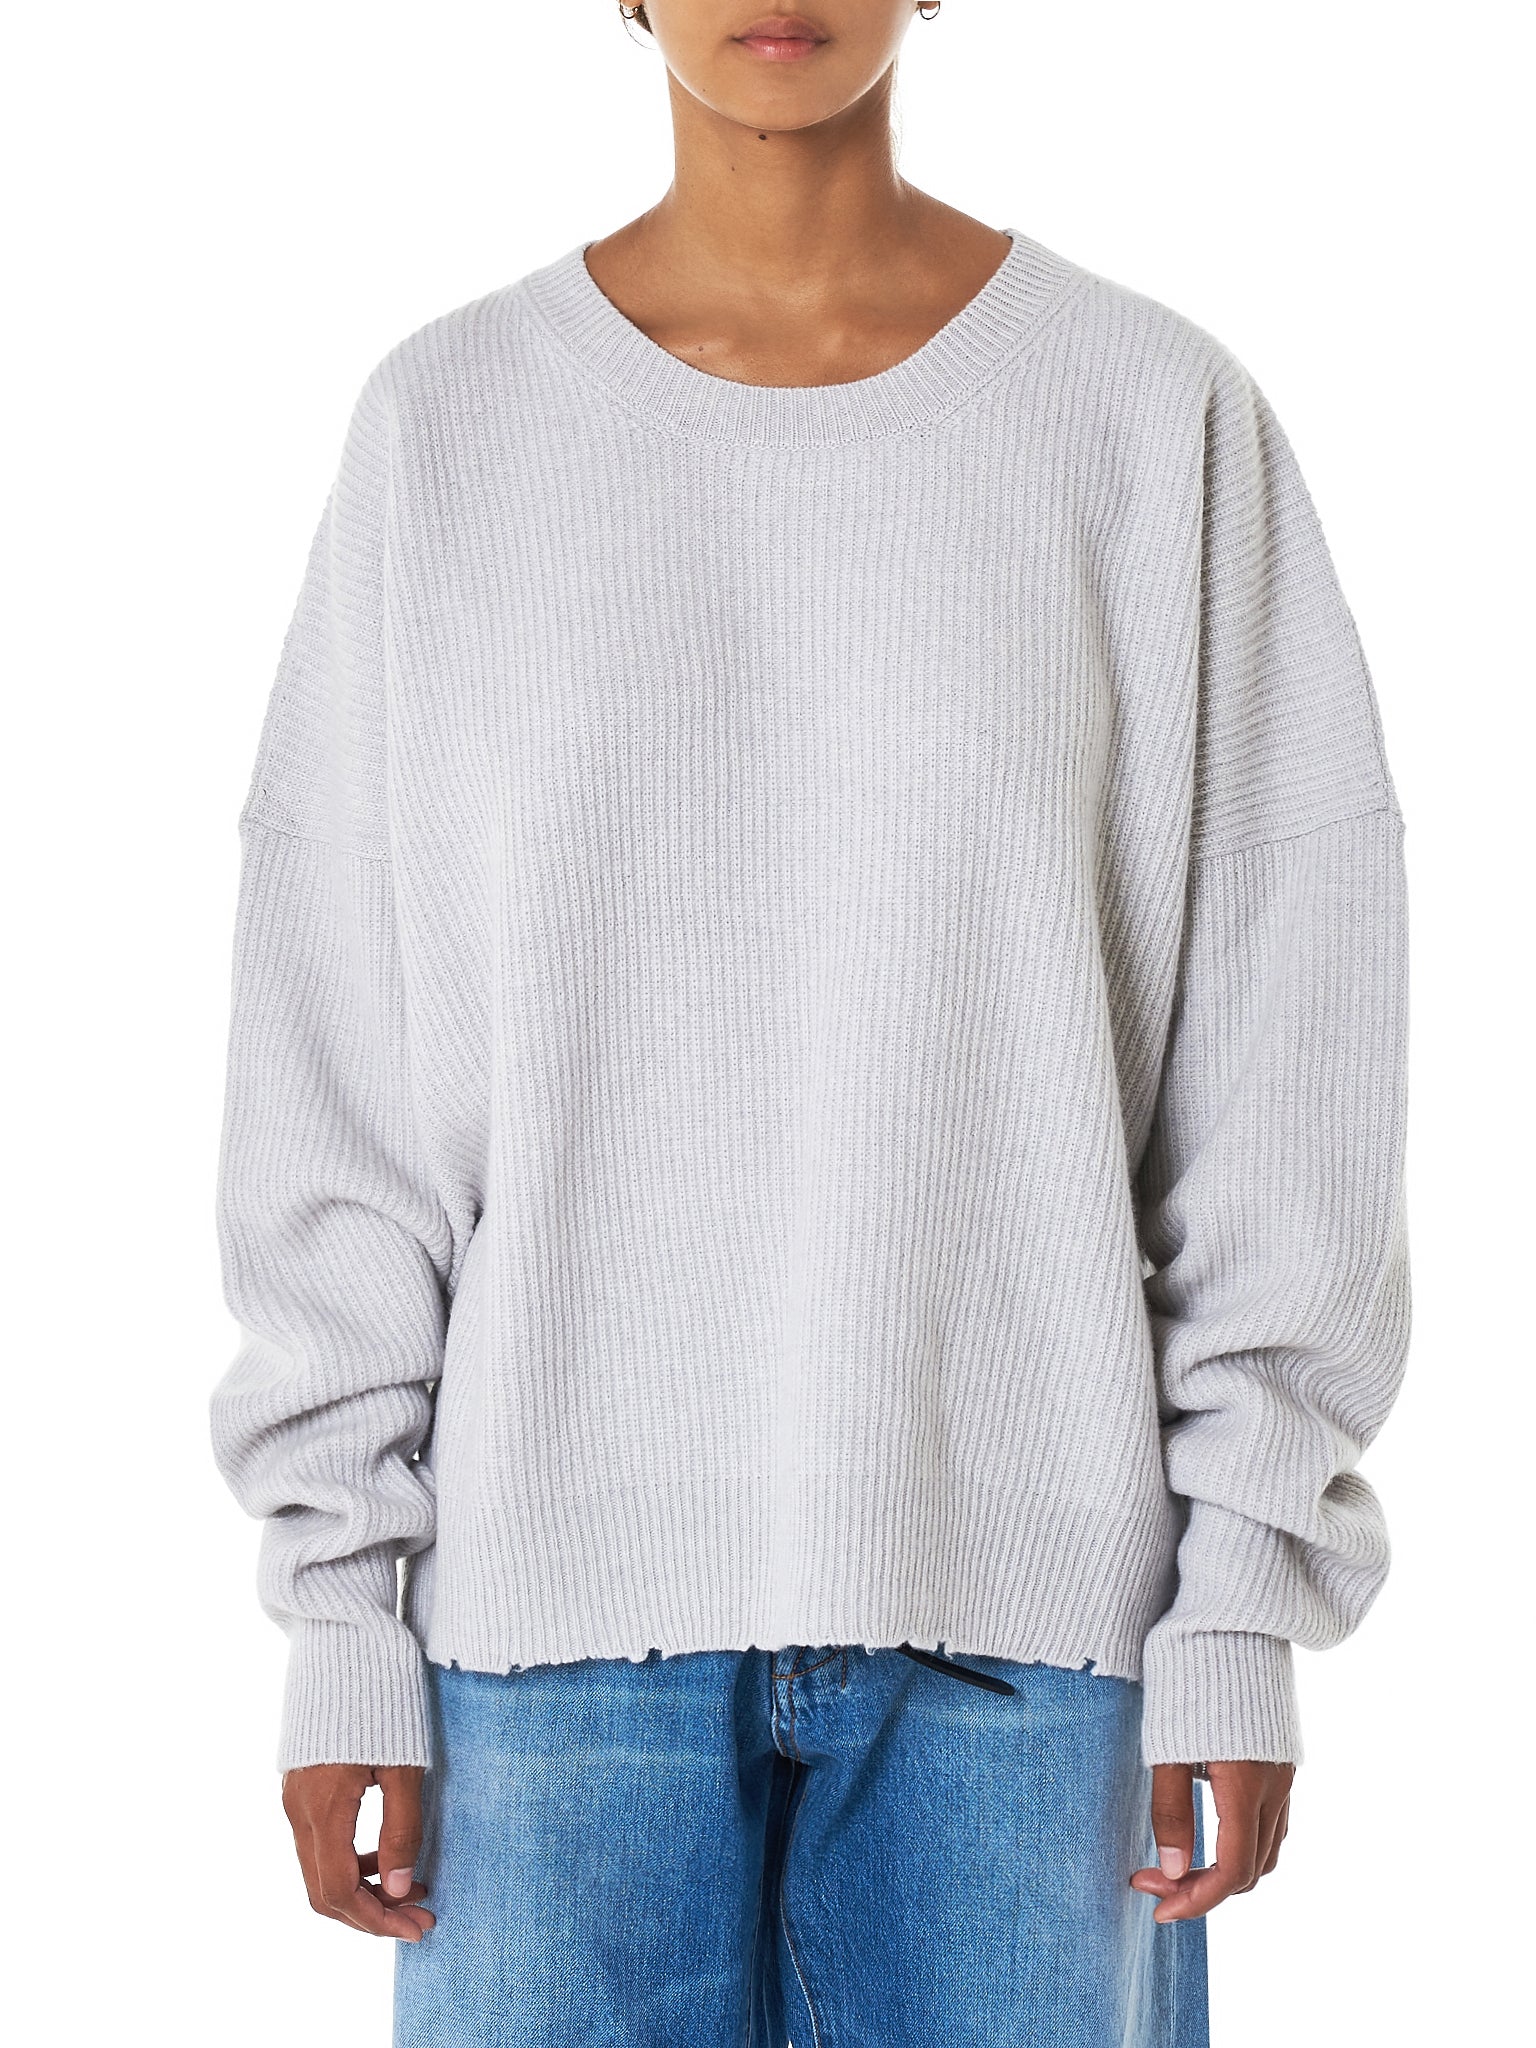 Unravel Sweater - Hlorenzo Front